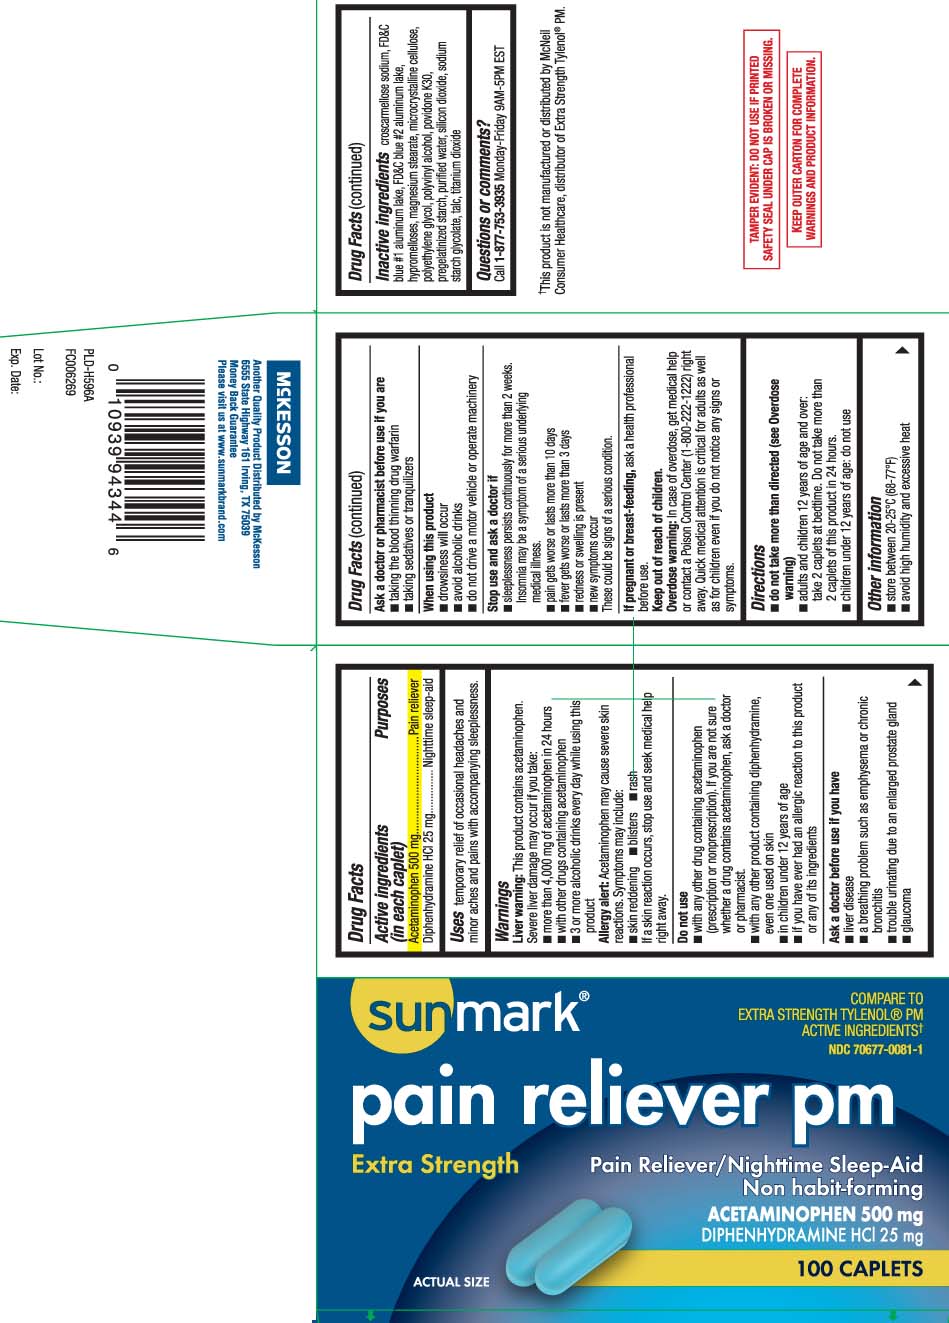 Acetaminophen 500 mg, Diphenhydramine HCL 25 mg